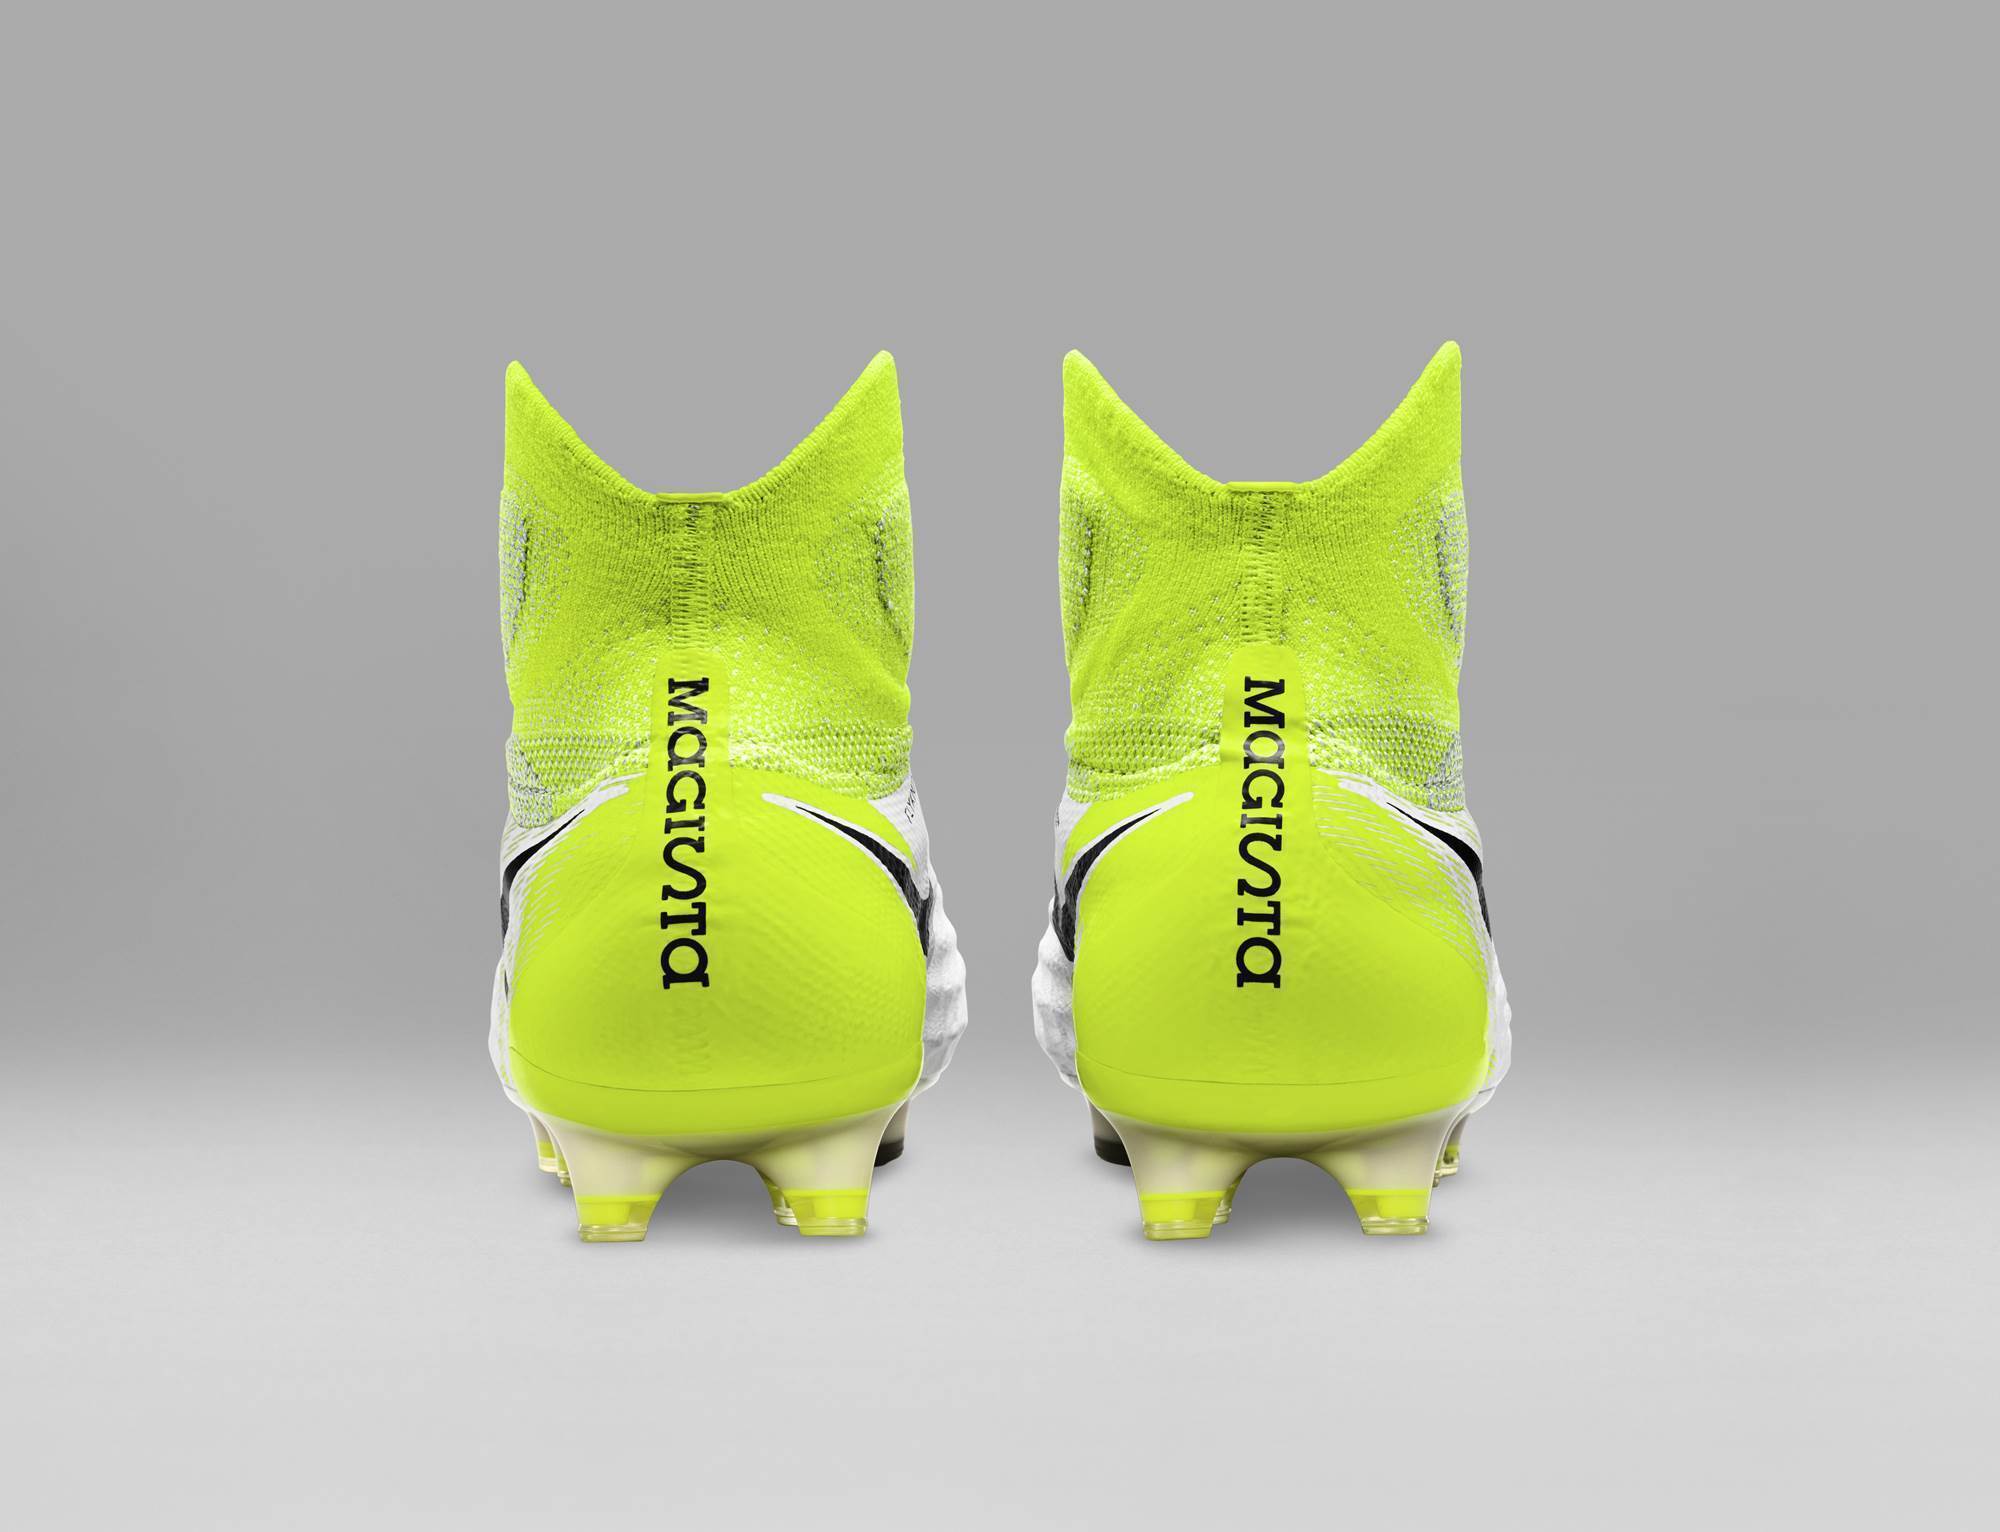 Nike Magista Obra II FG Firm Ground Soccer Cleat Jade Volt